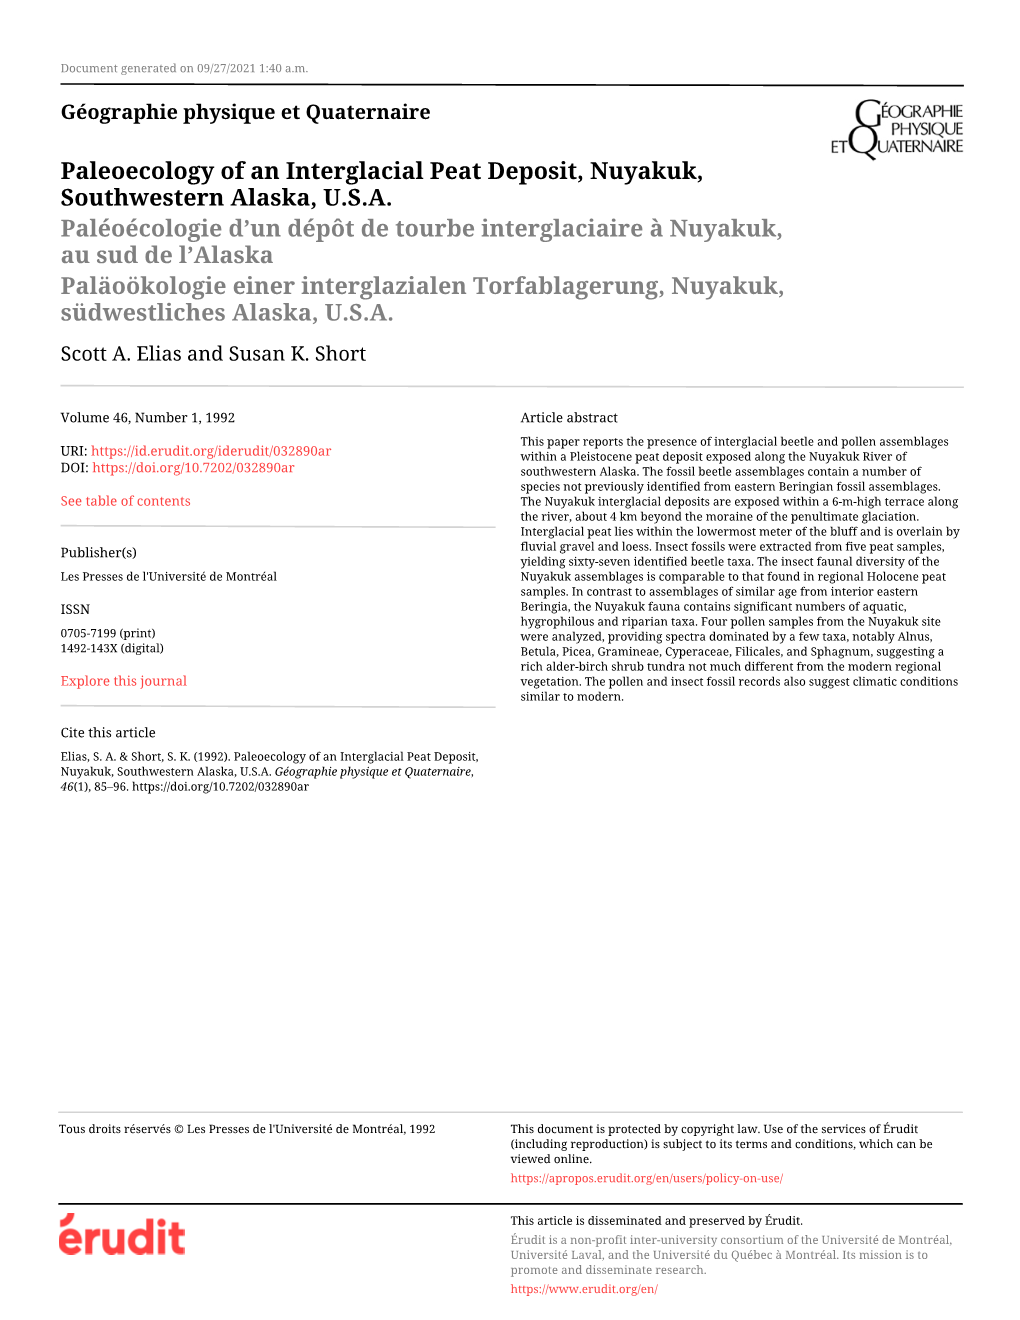 Paleoecology of an Interglacial Peat Deposit, Nuyakuk, Southwestern Alaska, U.S.A